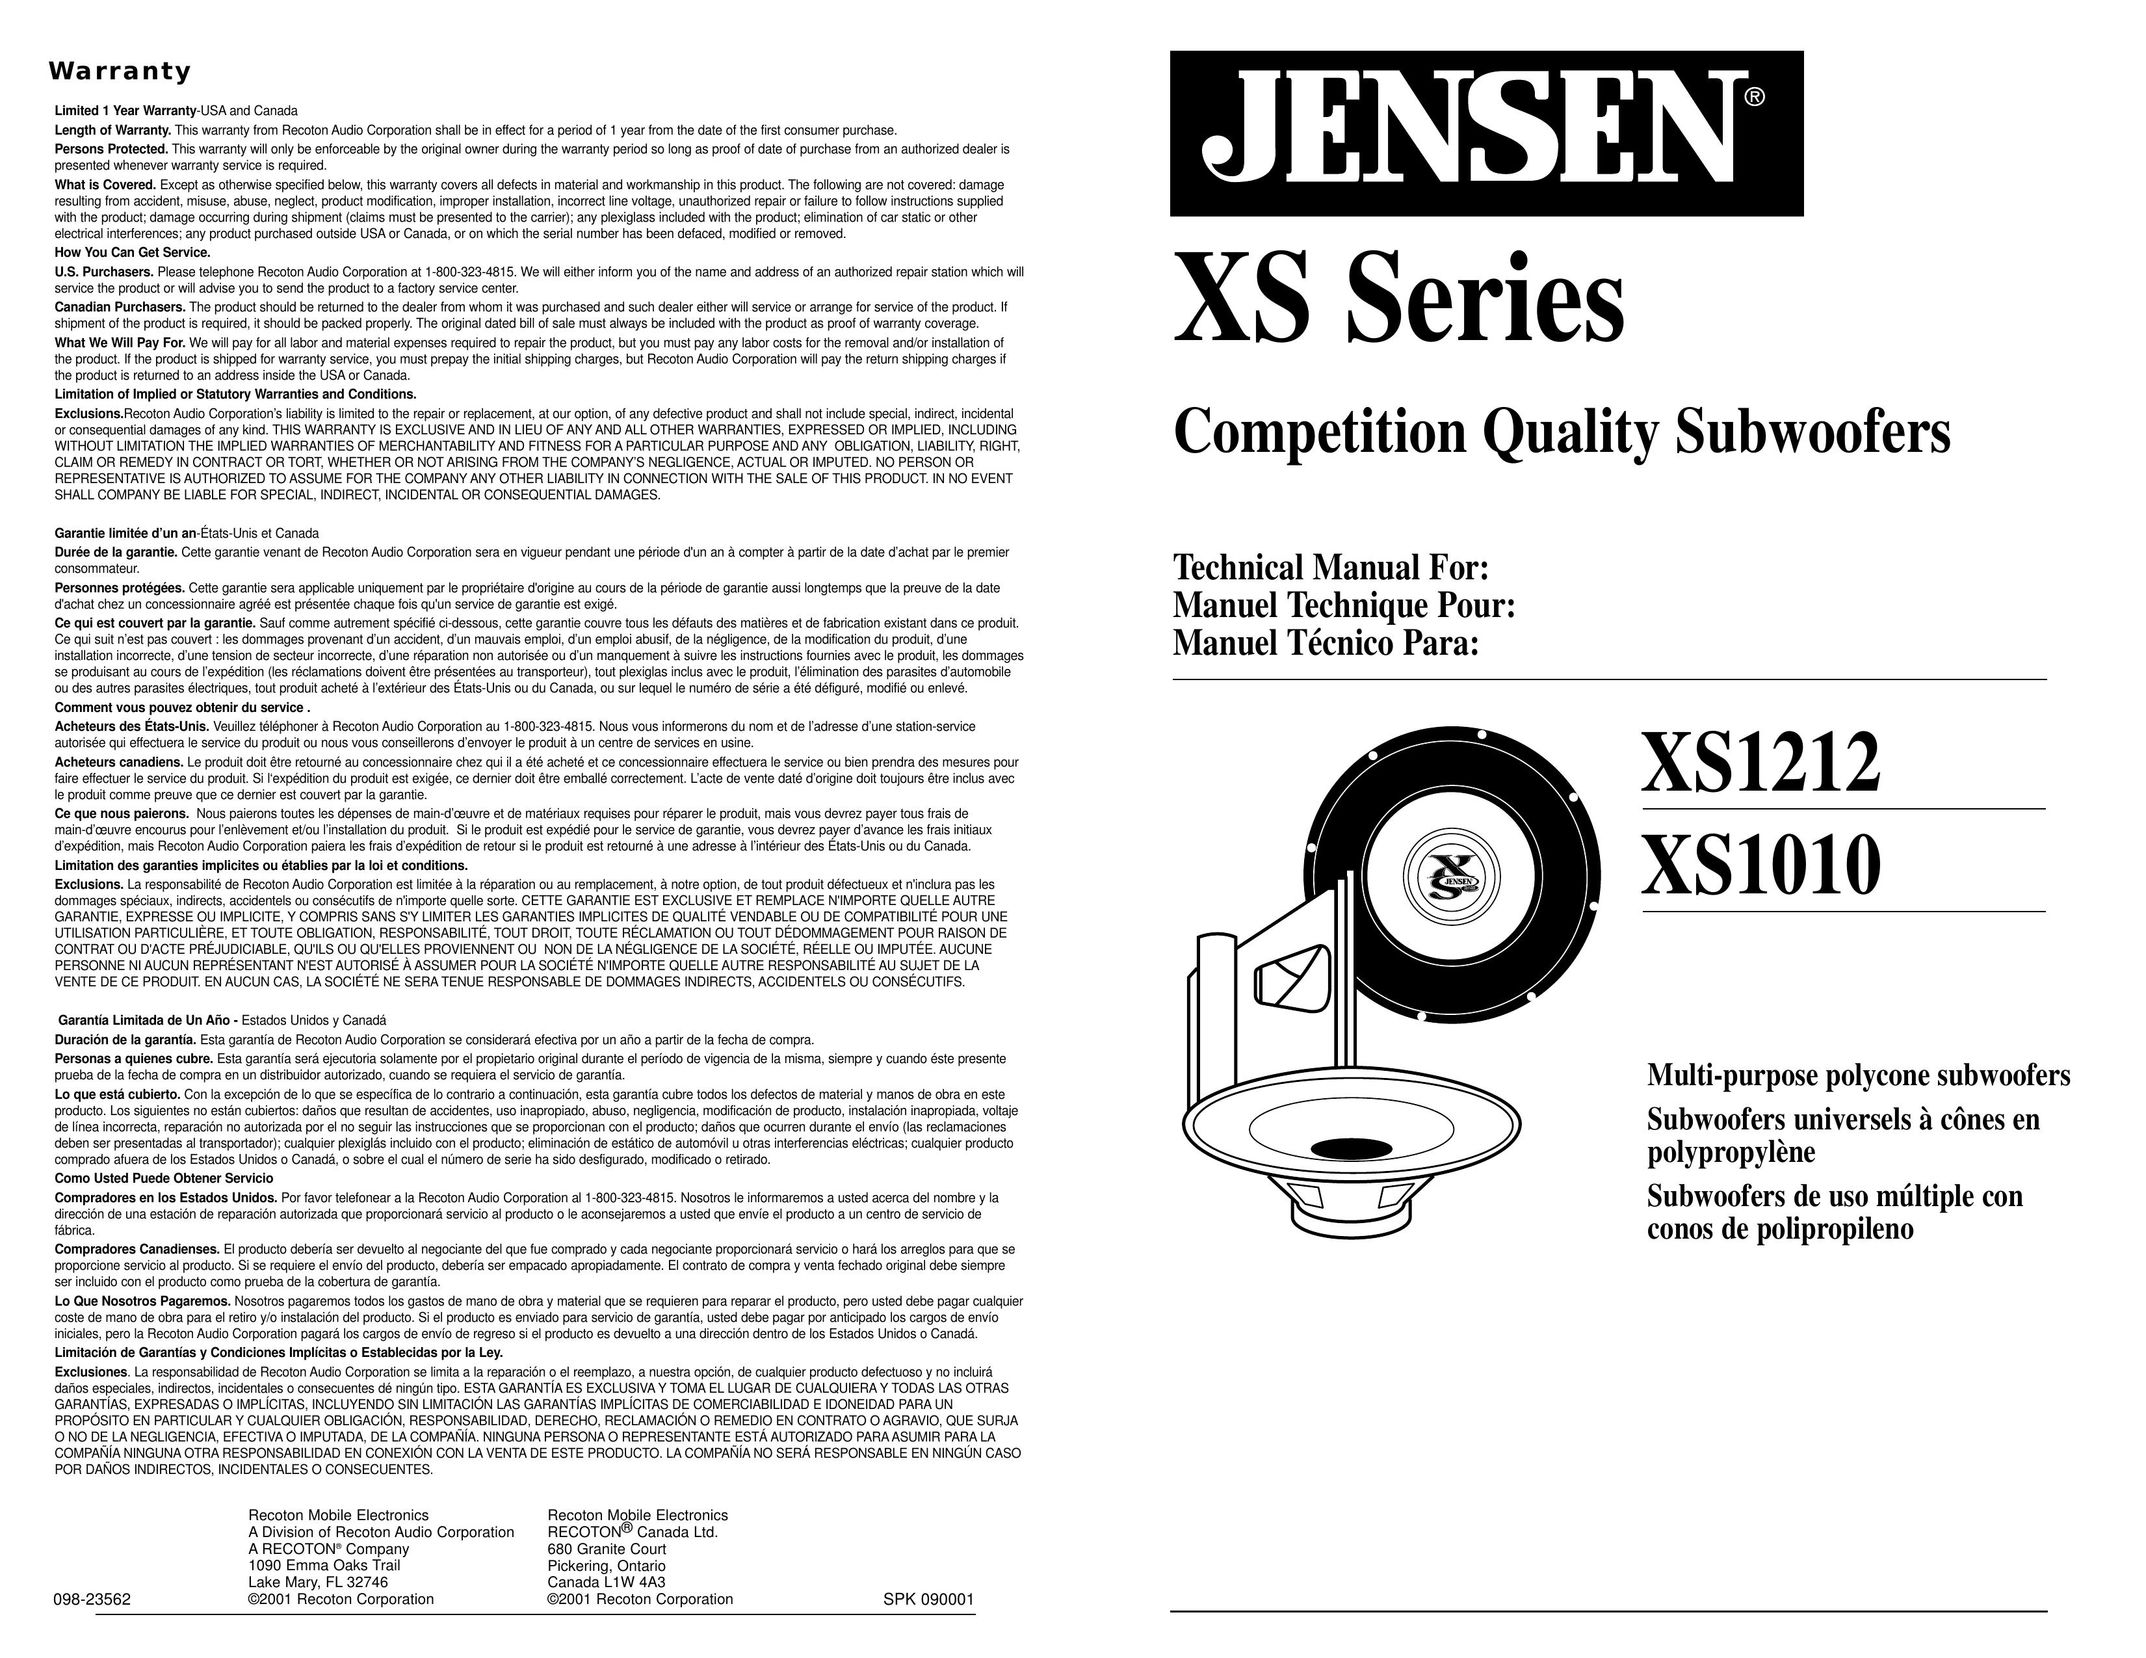 Jensen XS1212 Speaker User Manual